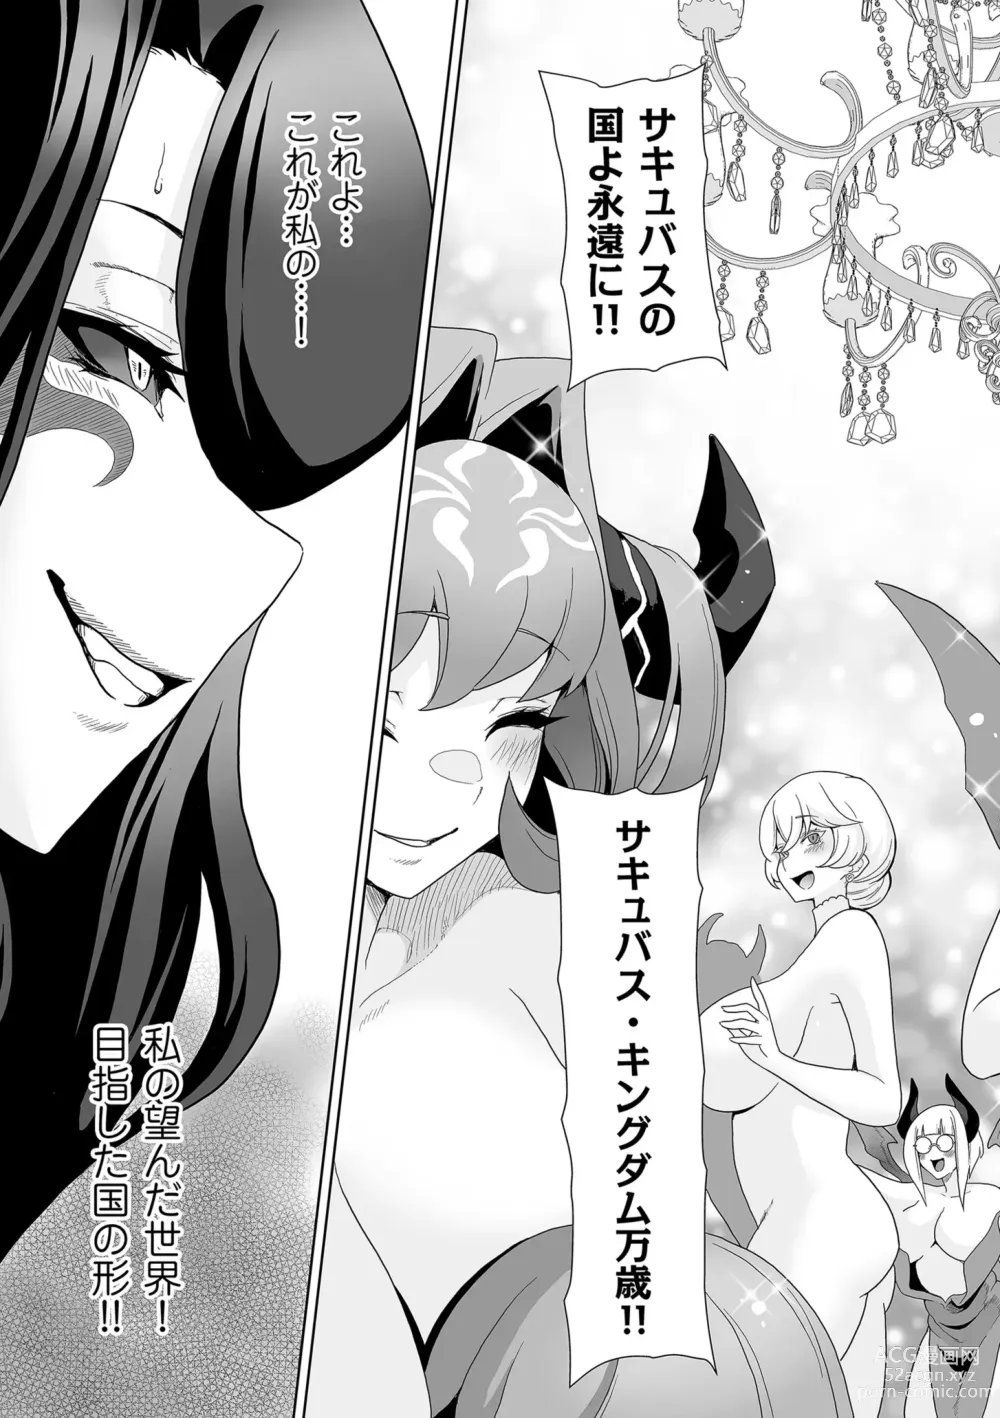 Page 211 of manga Succubus Kingdom